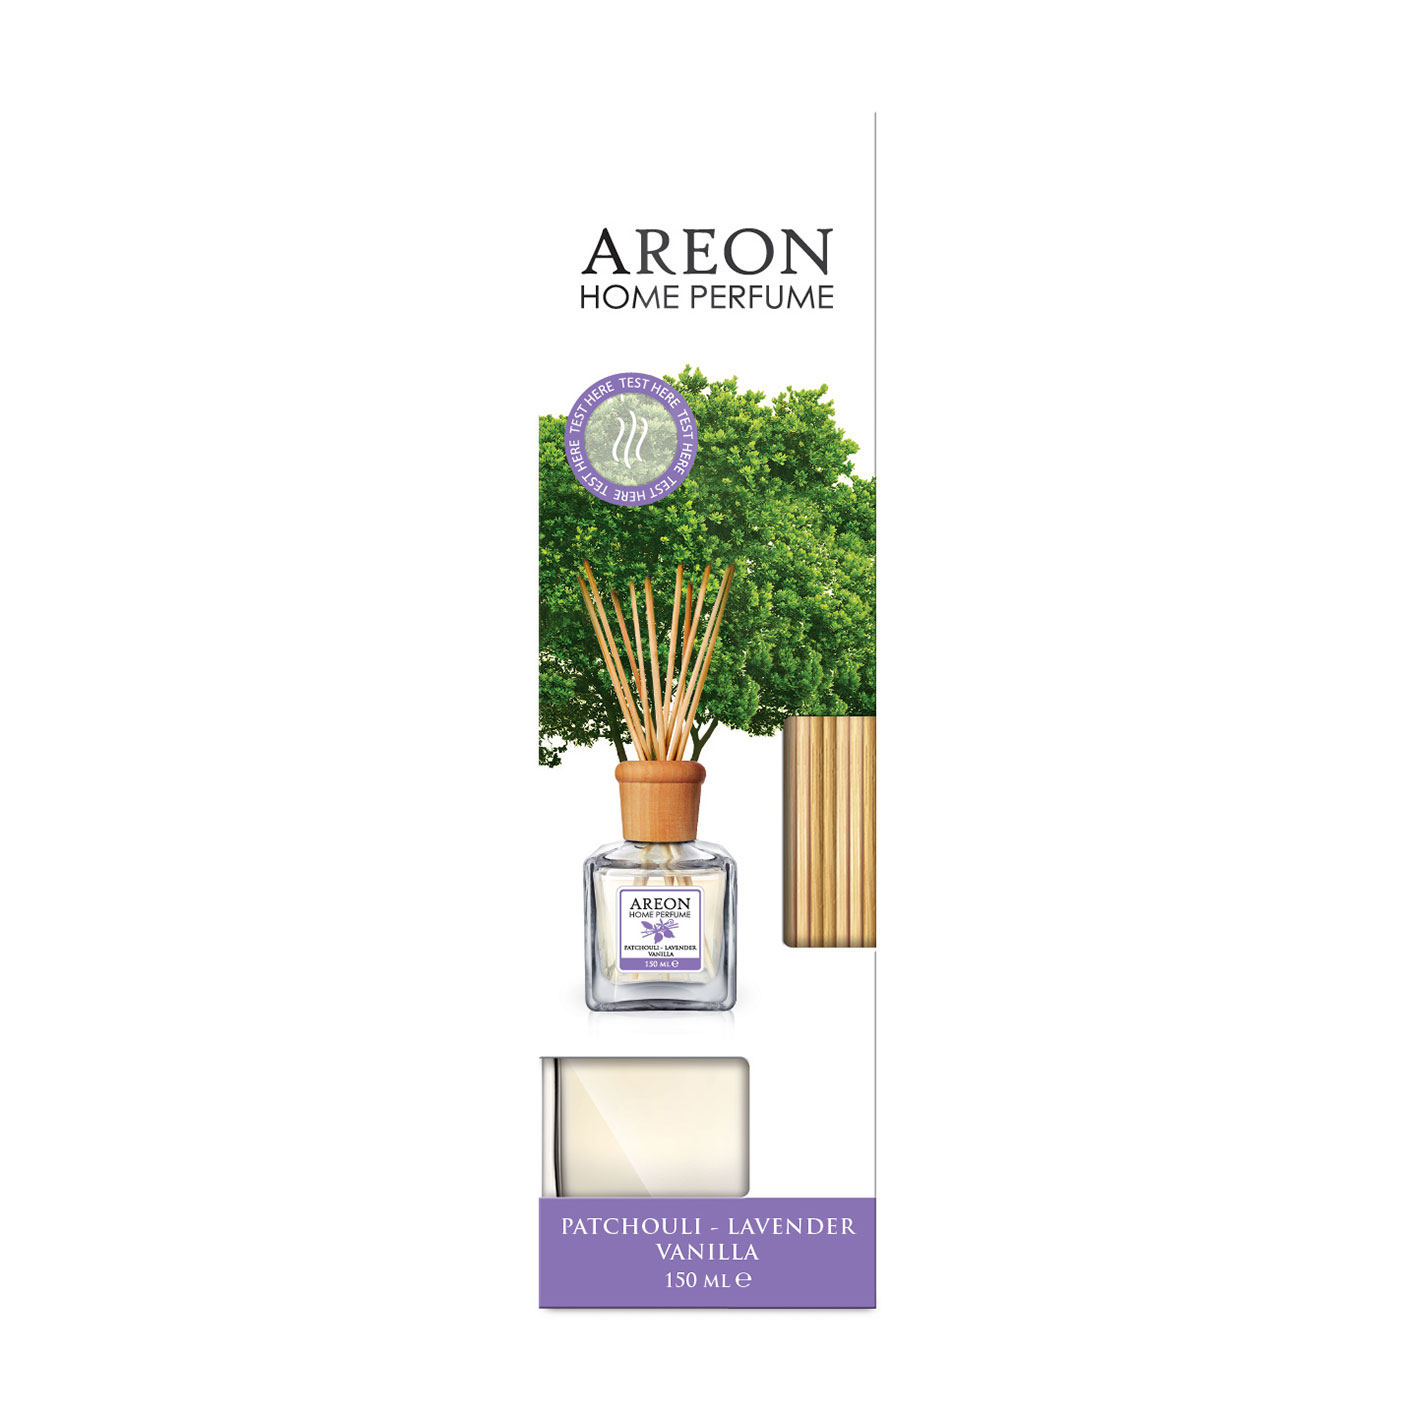 Areon Home Perfume 150ml Patchouli Lavender Vanilla